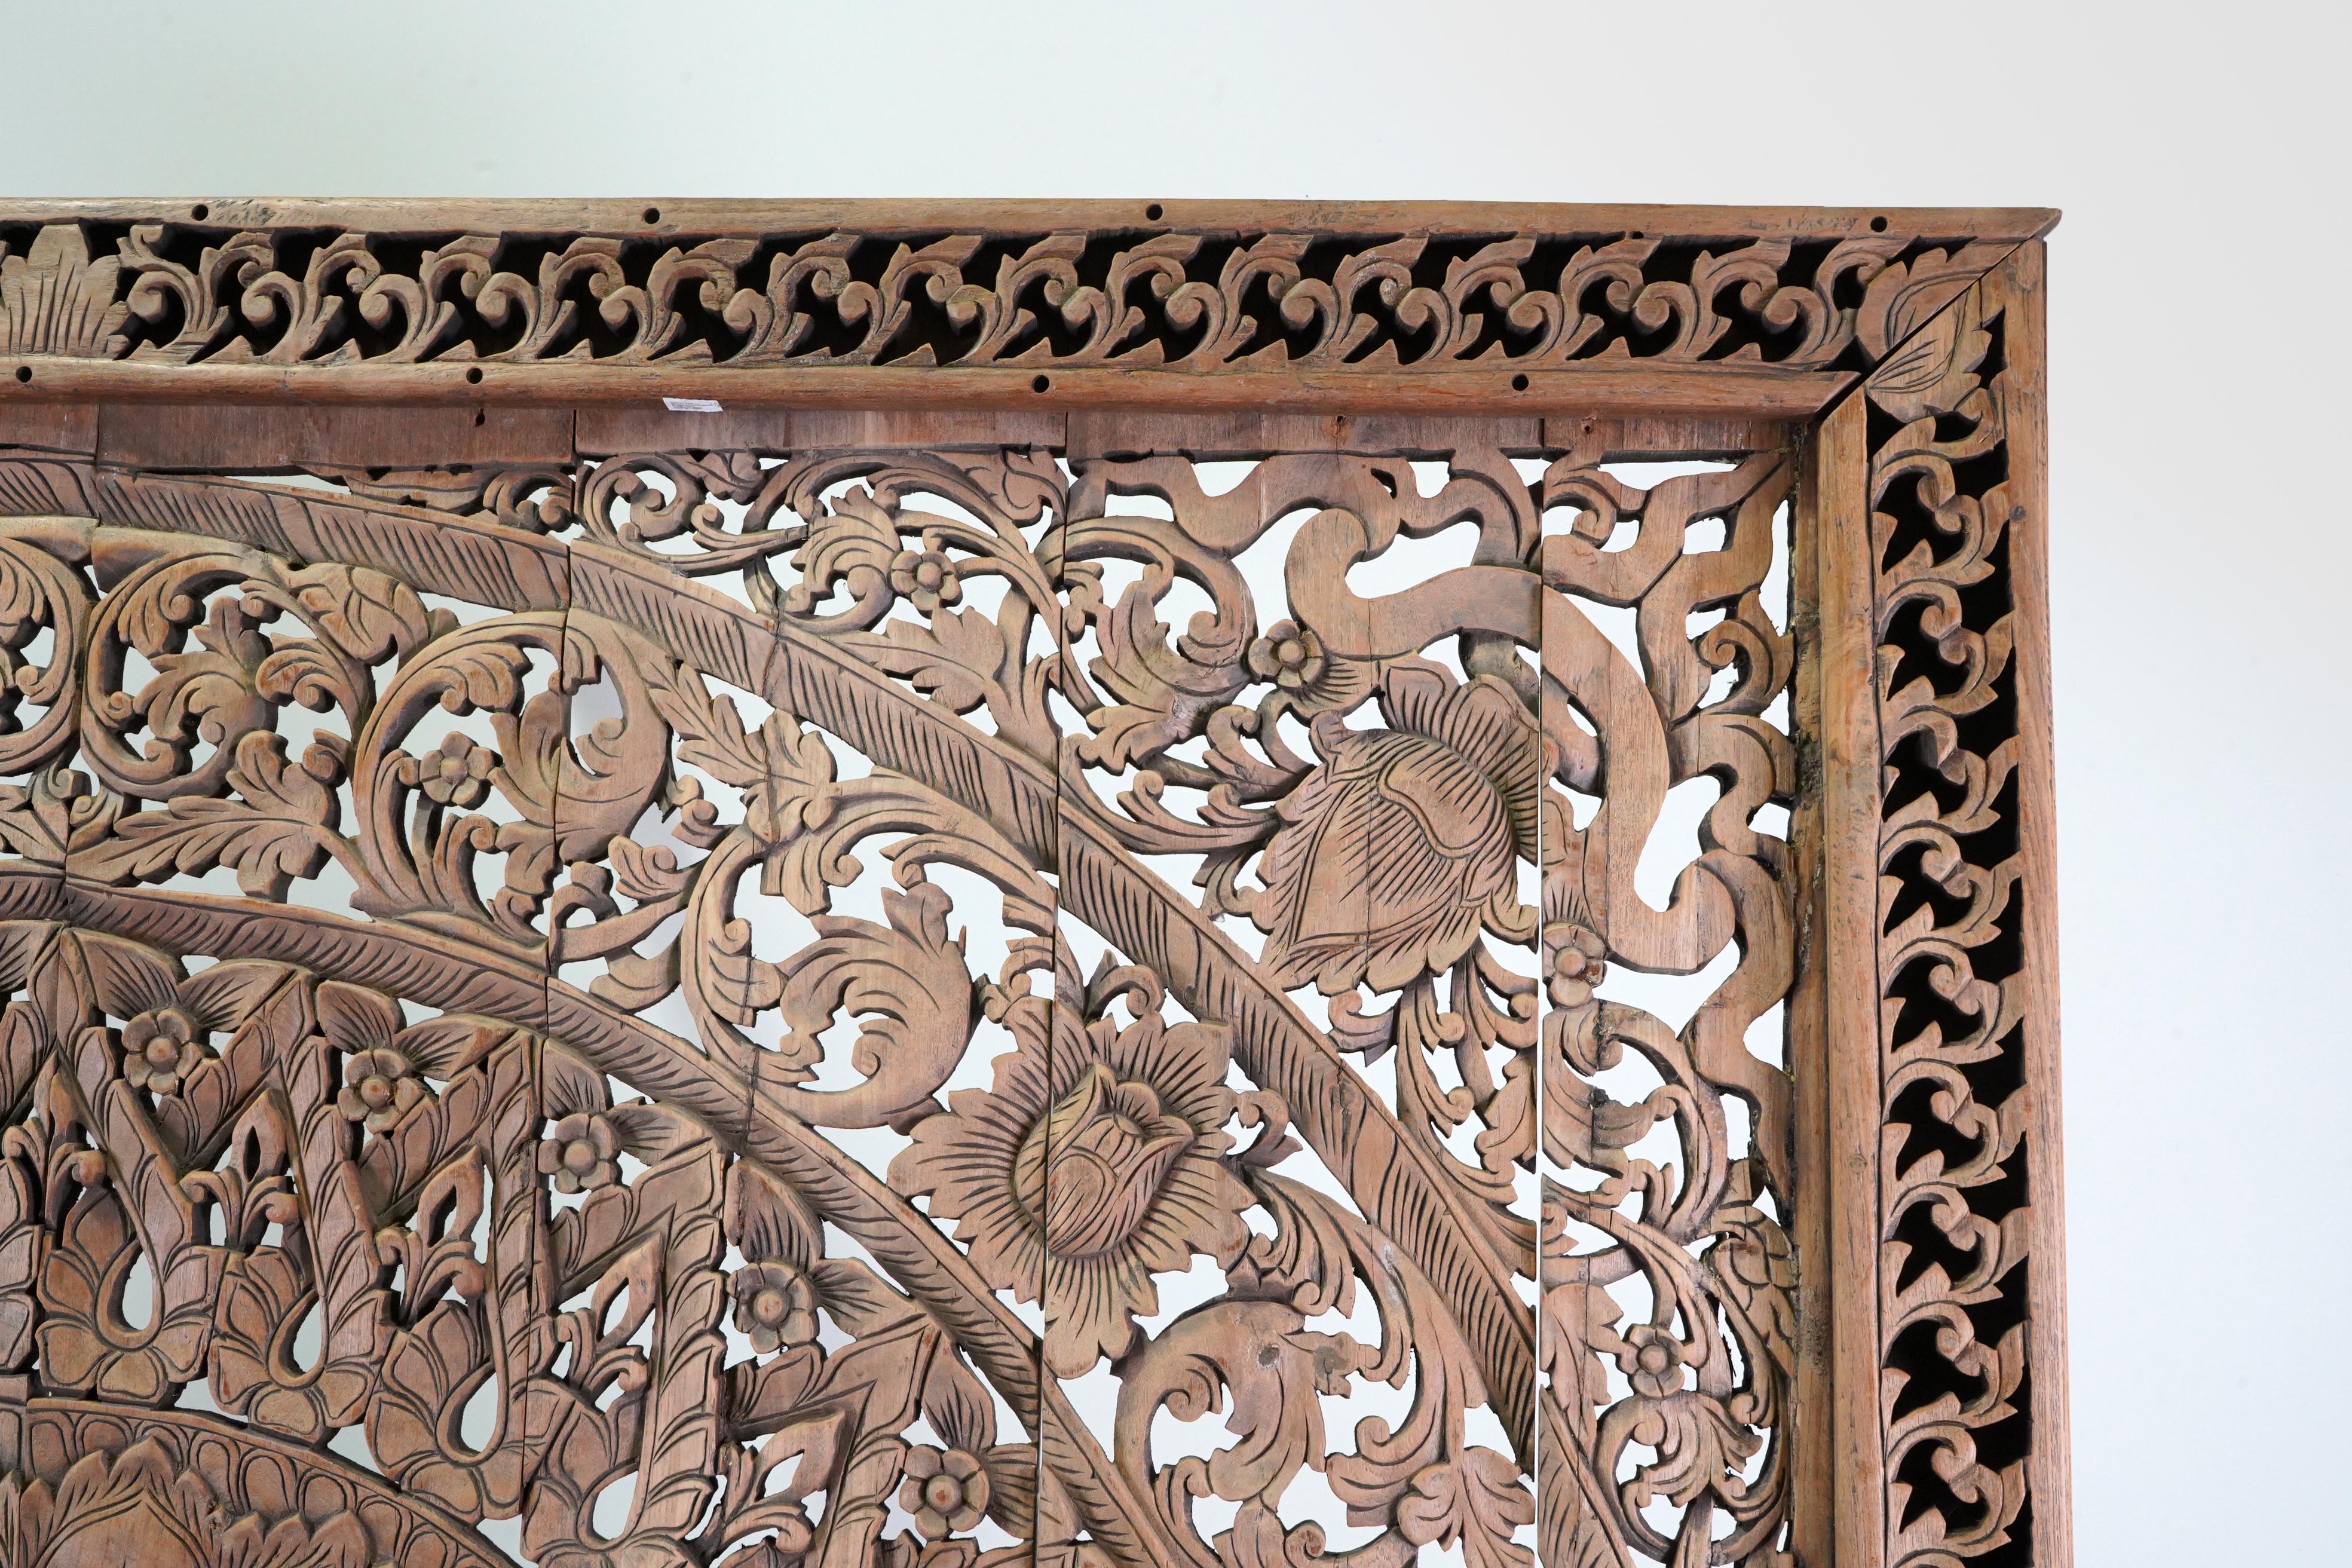 A Carved Teak Wood Lotus Flower Panel 8' x 8' 3